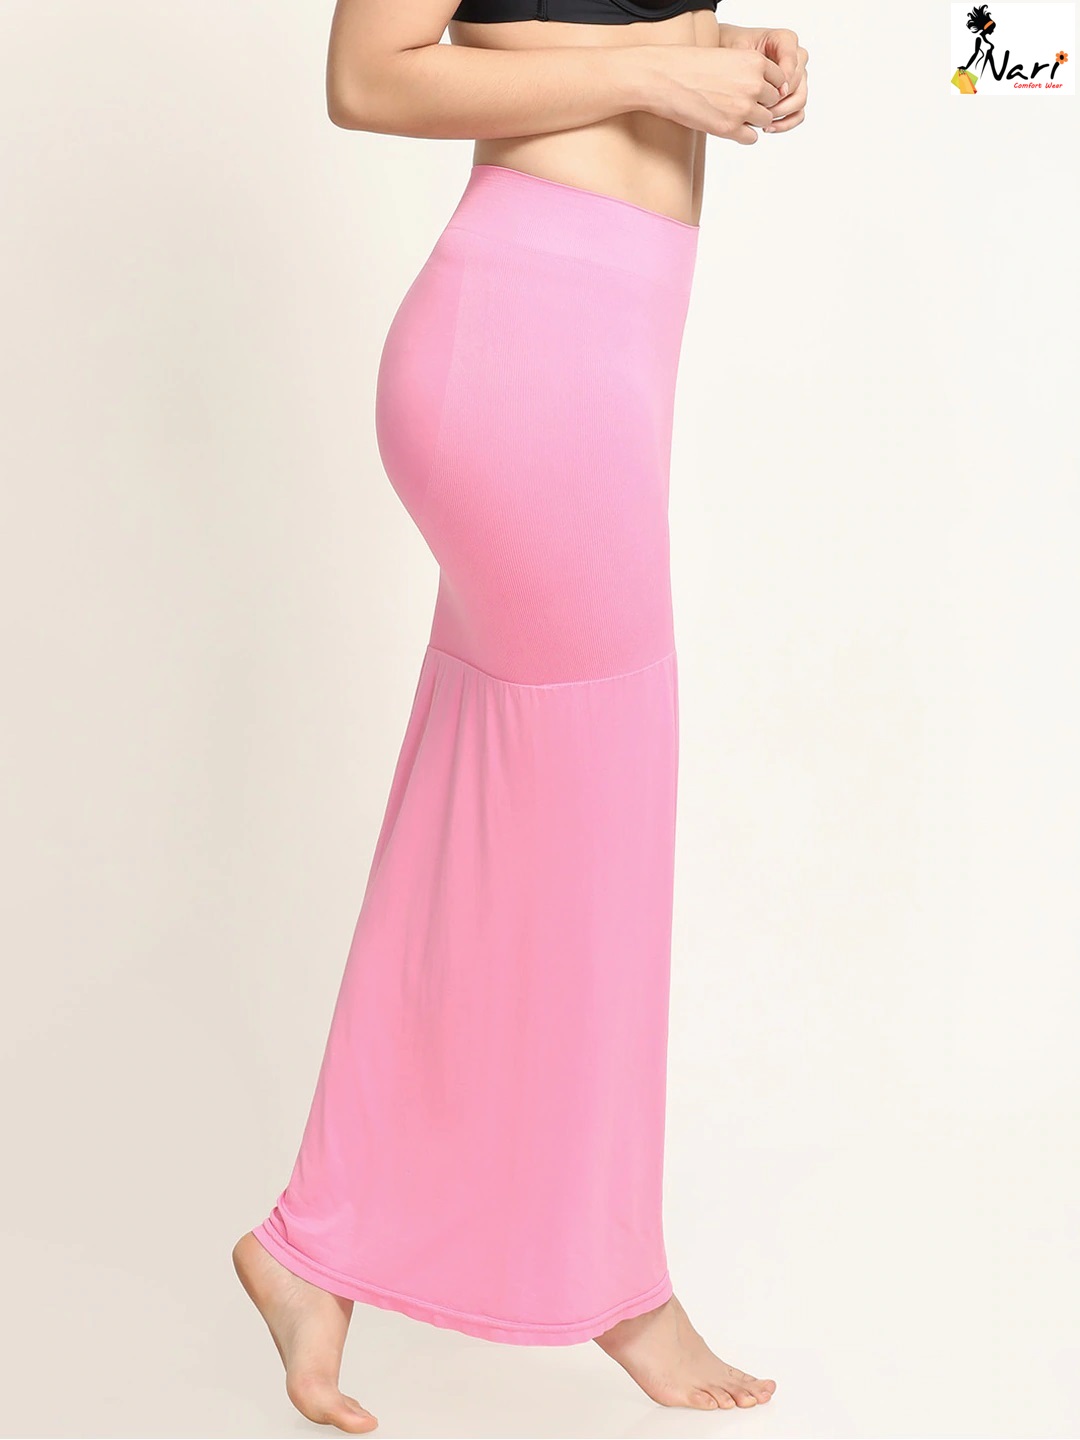 Saree Shapewear Petticoat for Women 4005 Saree Shaper Candy Pink